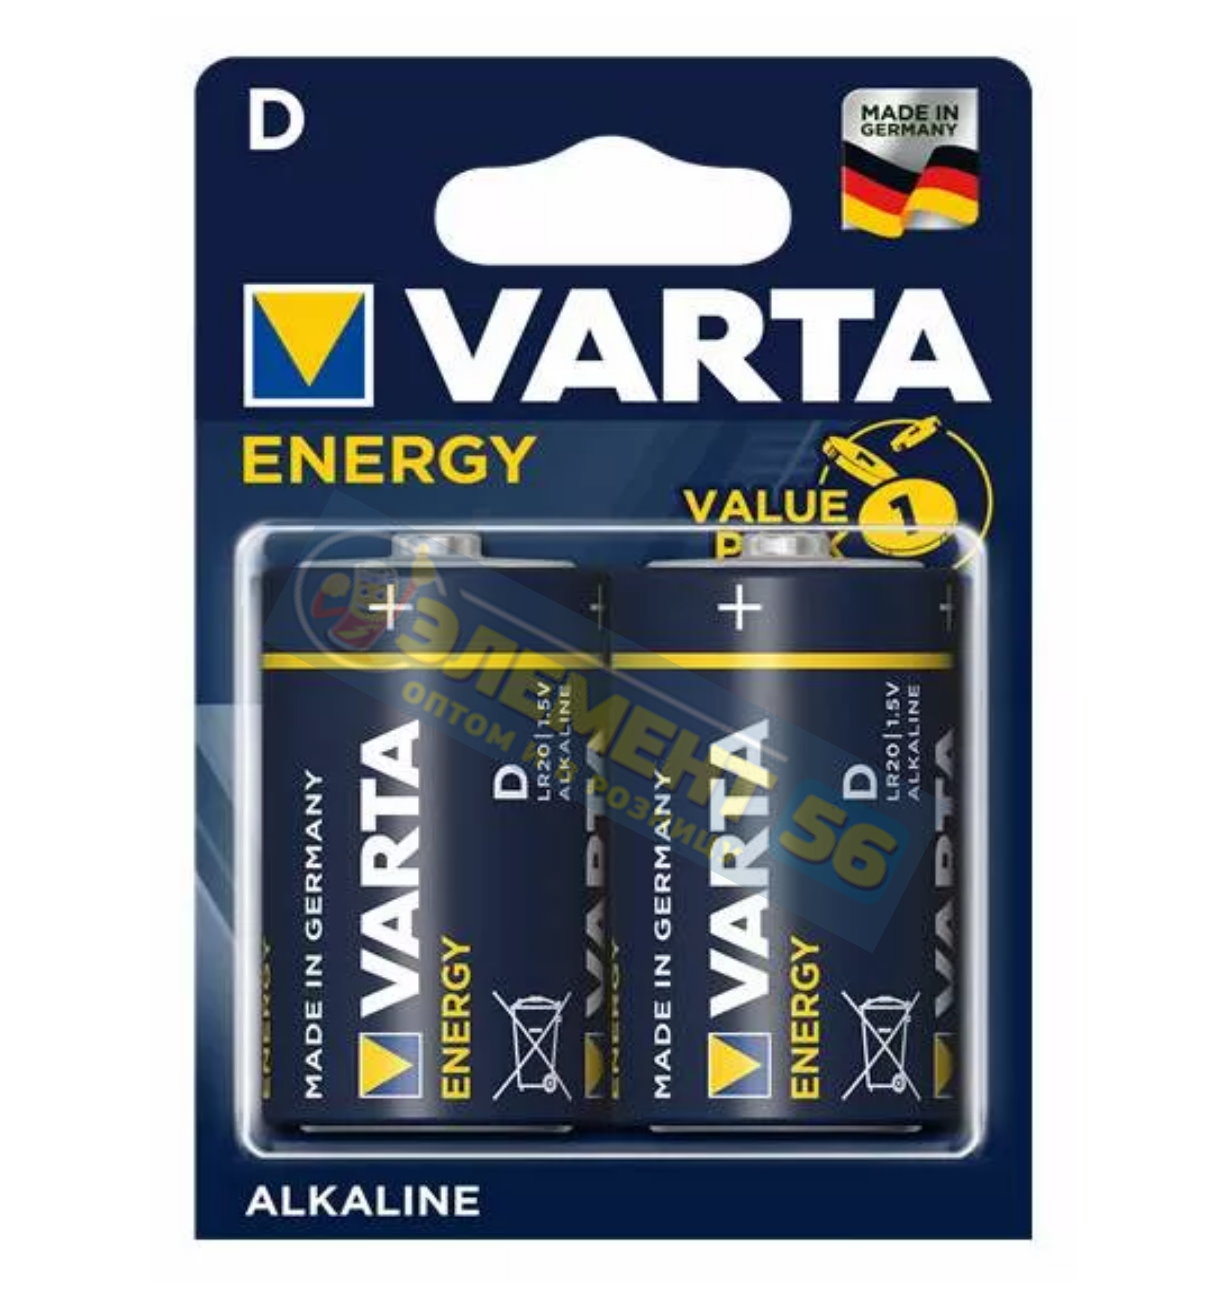 VARTA LR20 ENERGY ALKALINE , MN1300, A373, D 2BL (2) (20) 28